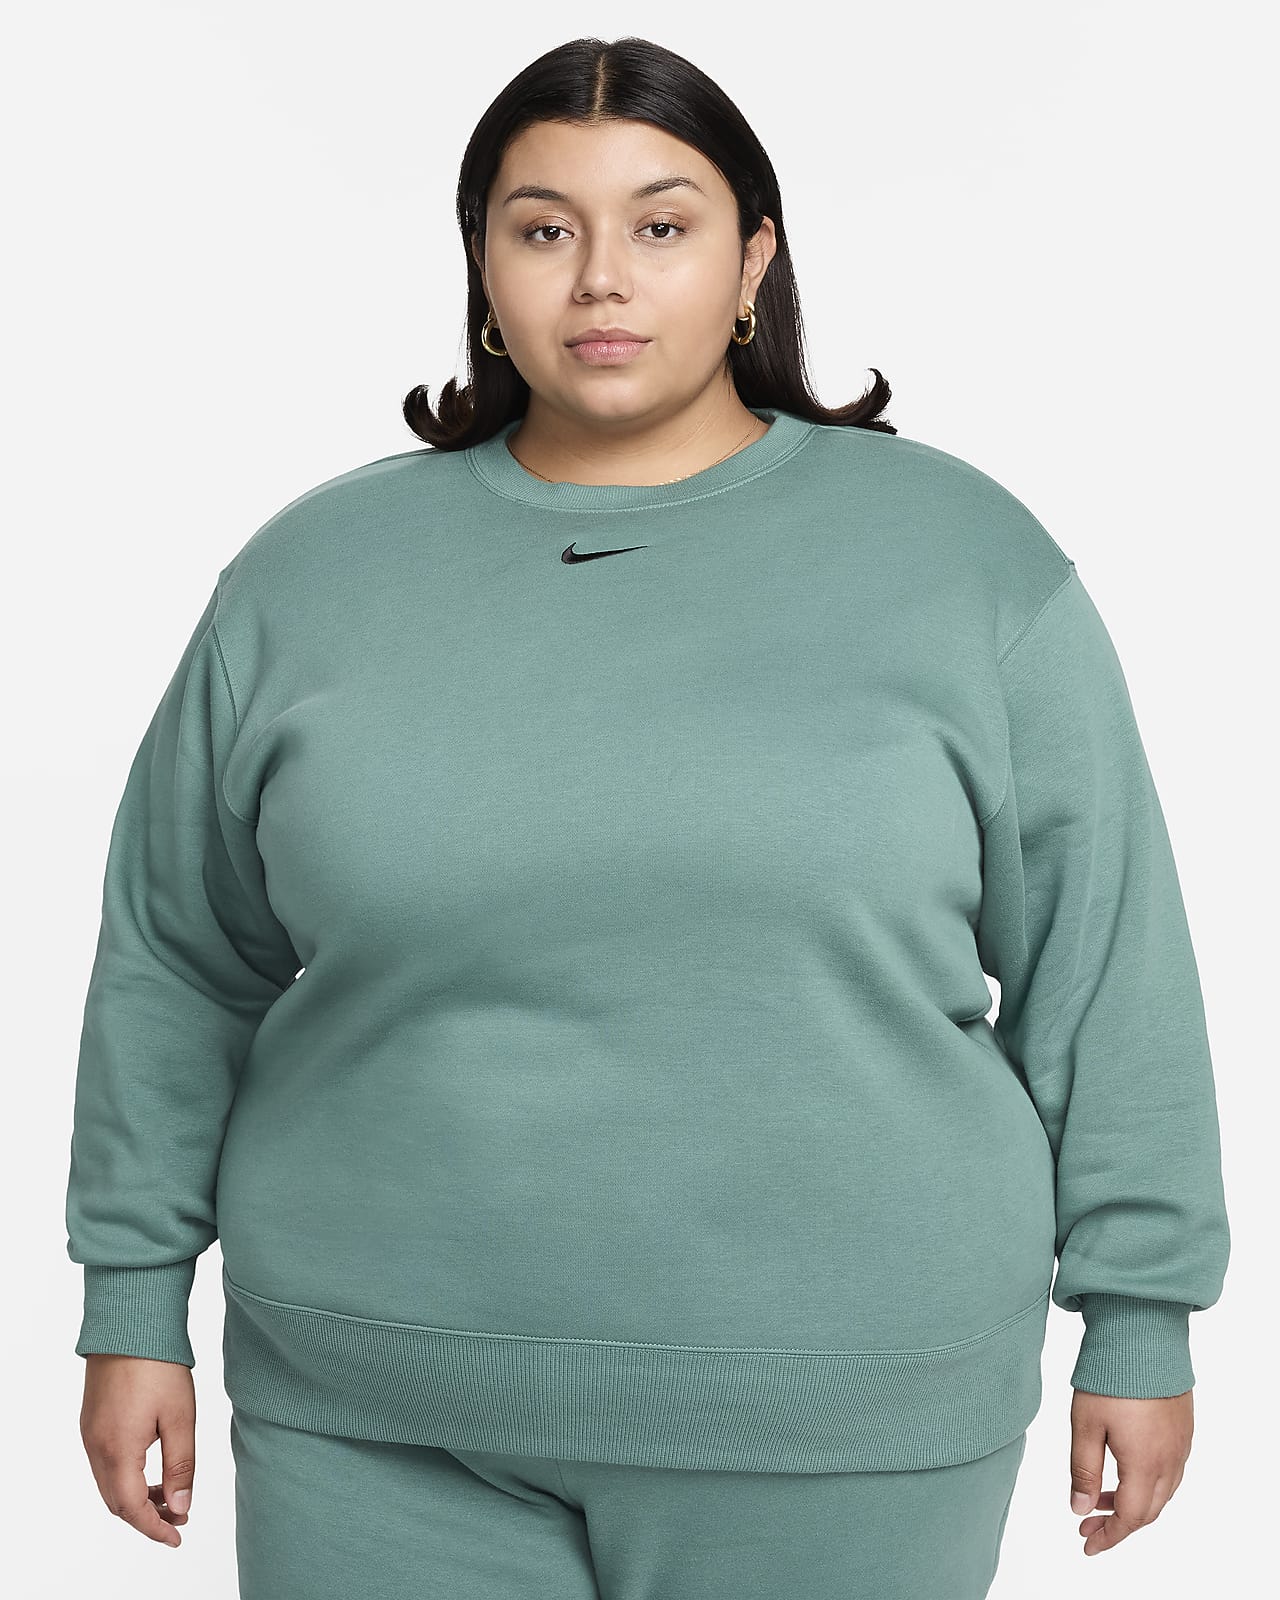 Nike Sportswear Phoenix Fleece Dessuadora oversized de coll rodó (talles grans) - Dona